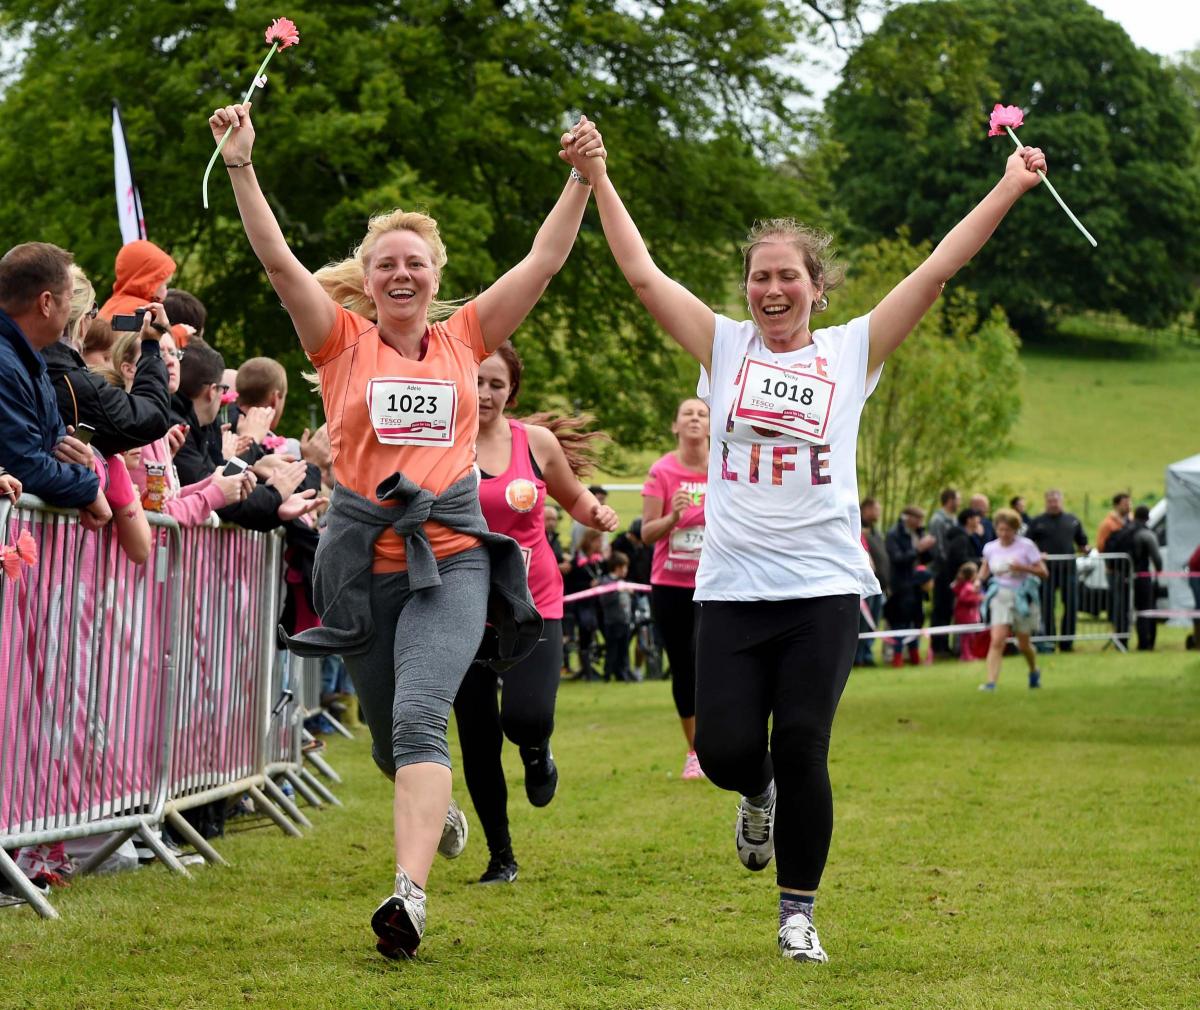 Race For Life 2015 - By Finnbarr Webster